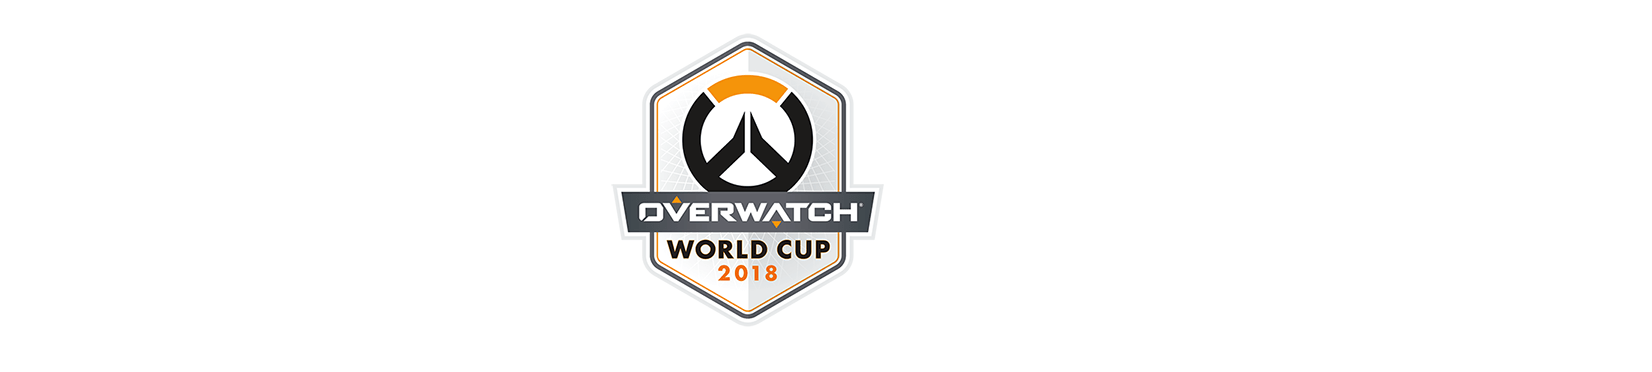 Coupe du monde Overwatch 2018